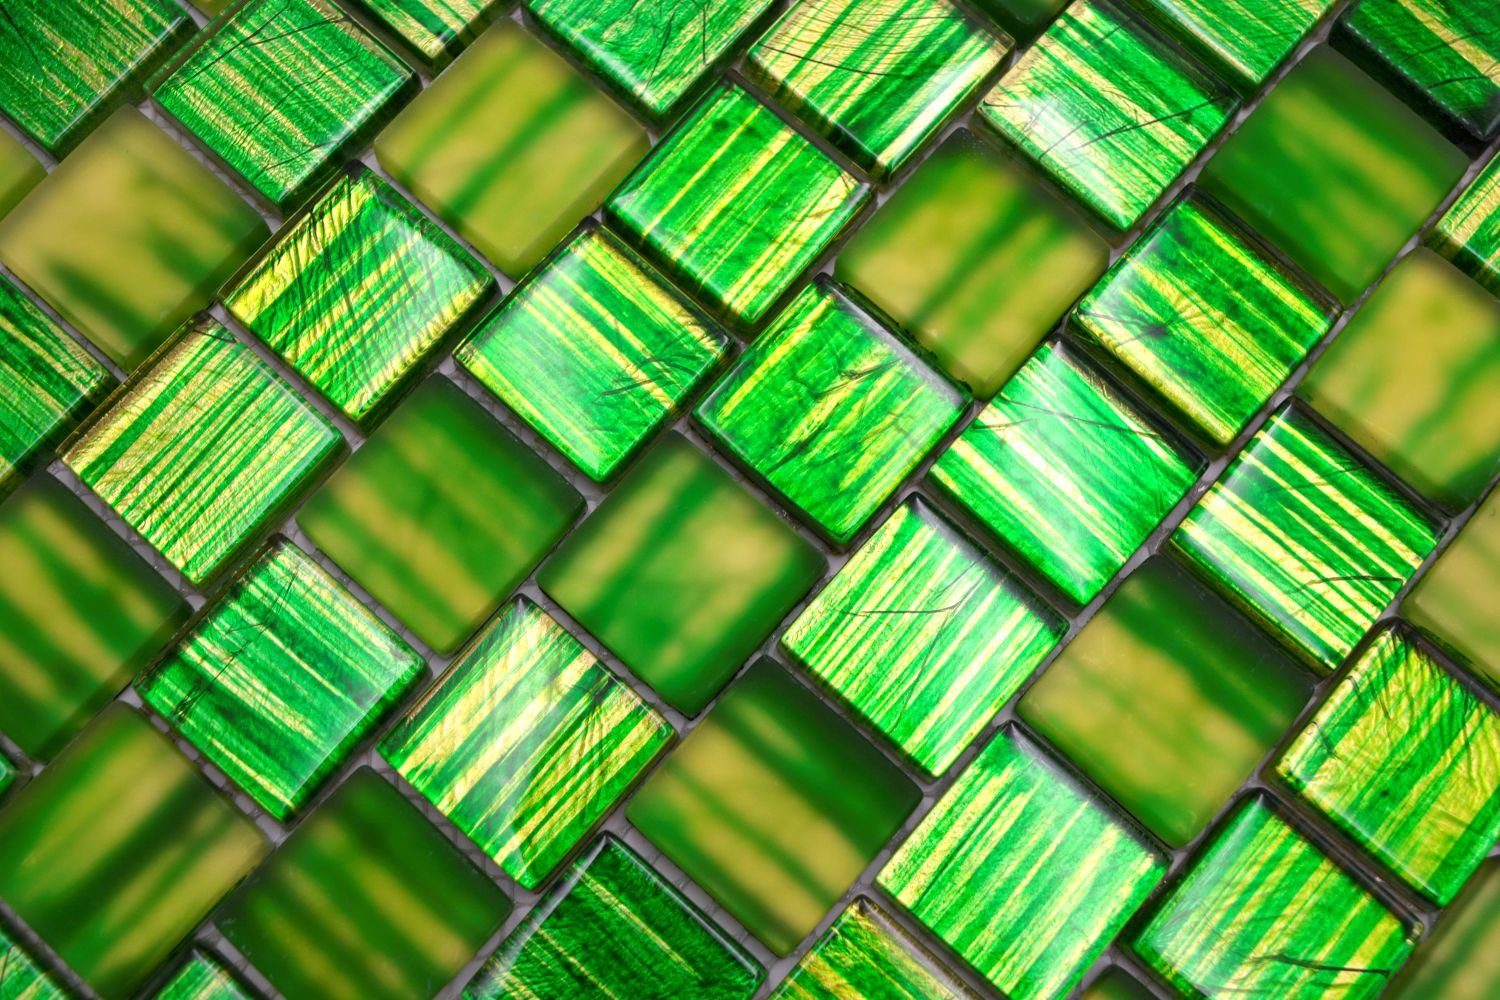 Mosani Mosaikfliesen Mosaik Milchglas Glasmosaik grün Transluzent matt Fliese Crystal klar